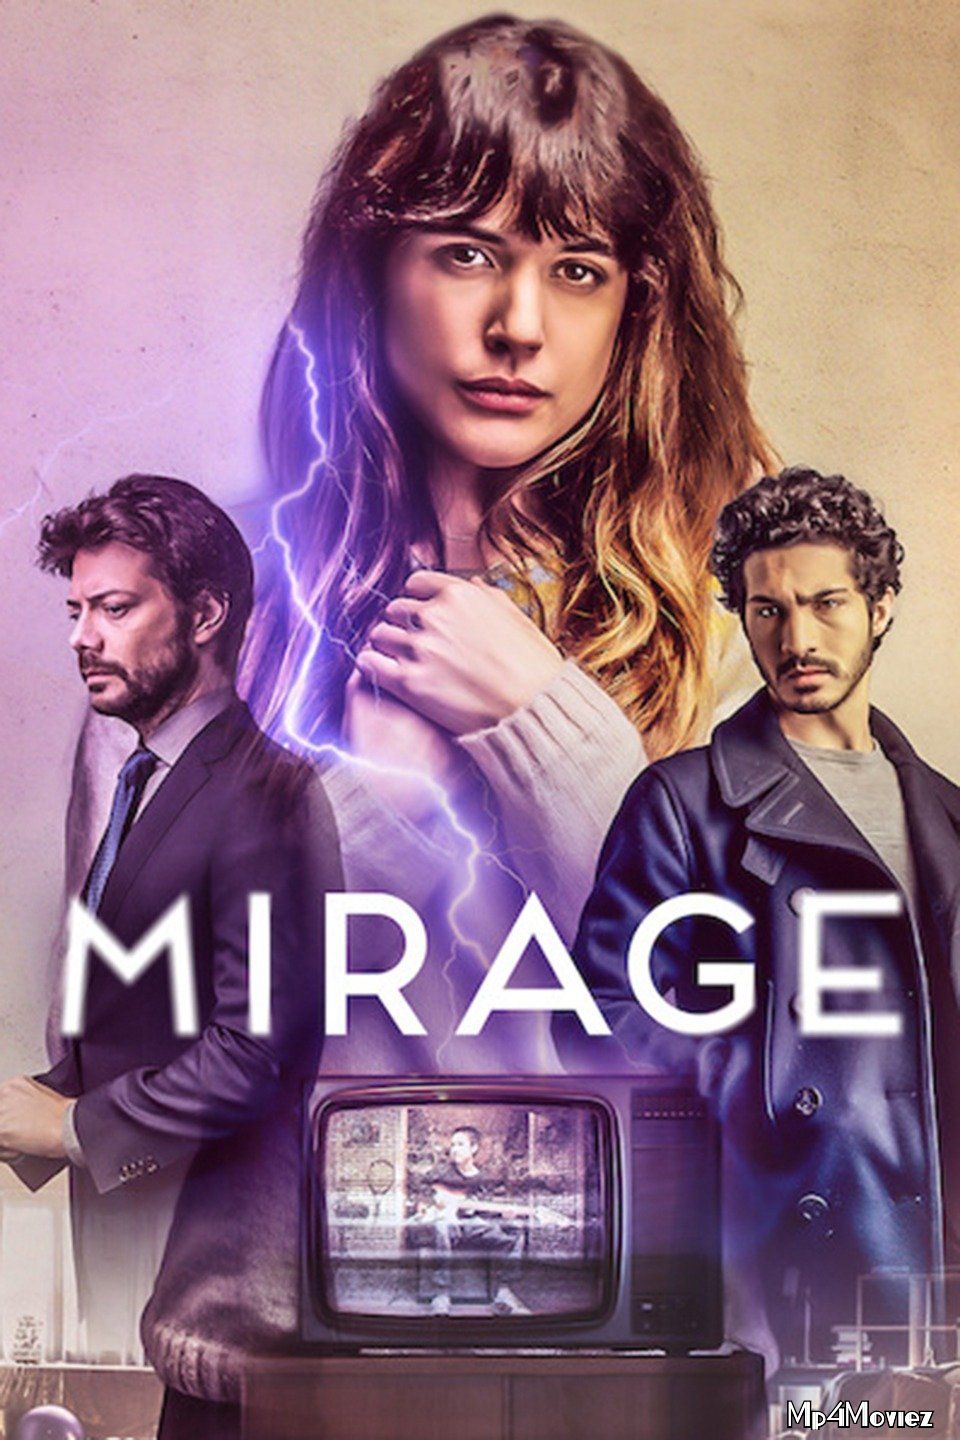 Mirage (2019) Hindi Dubbed BluRay download full movie